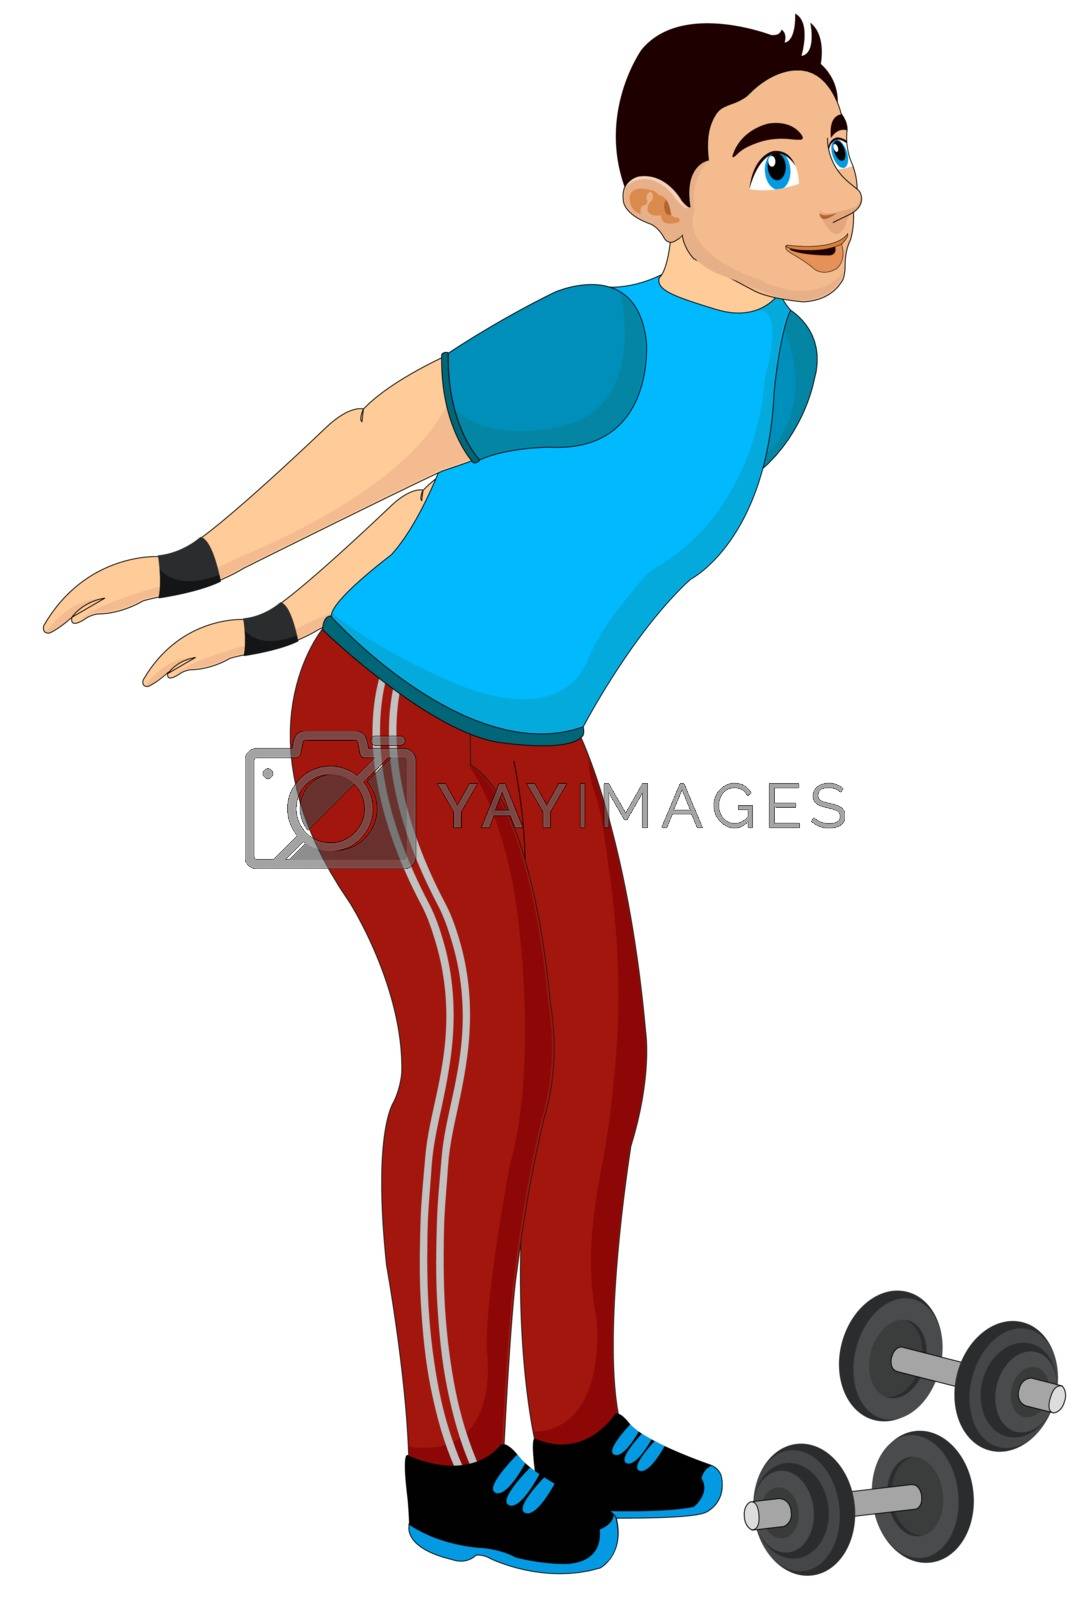 Royalty free image of Exercising, man doing bending, illustration by Morphart